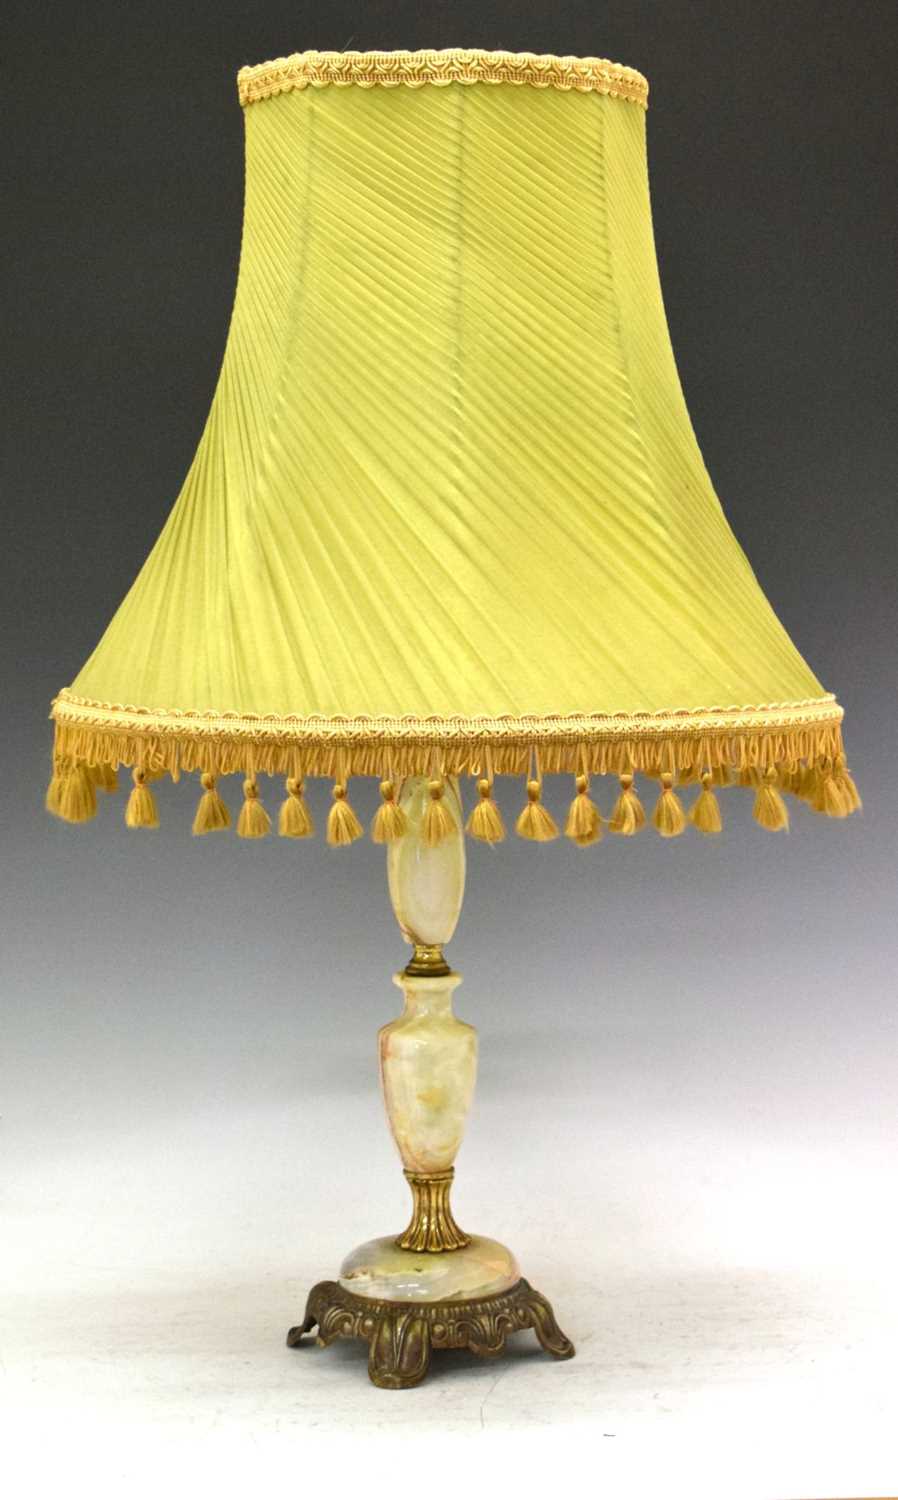 Onyx lamp base with shade